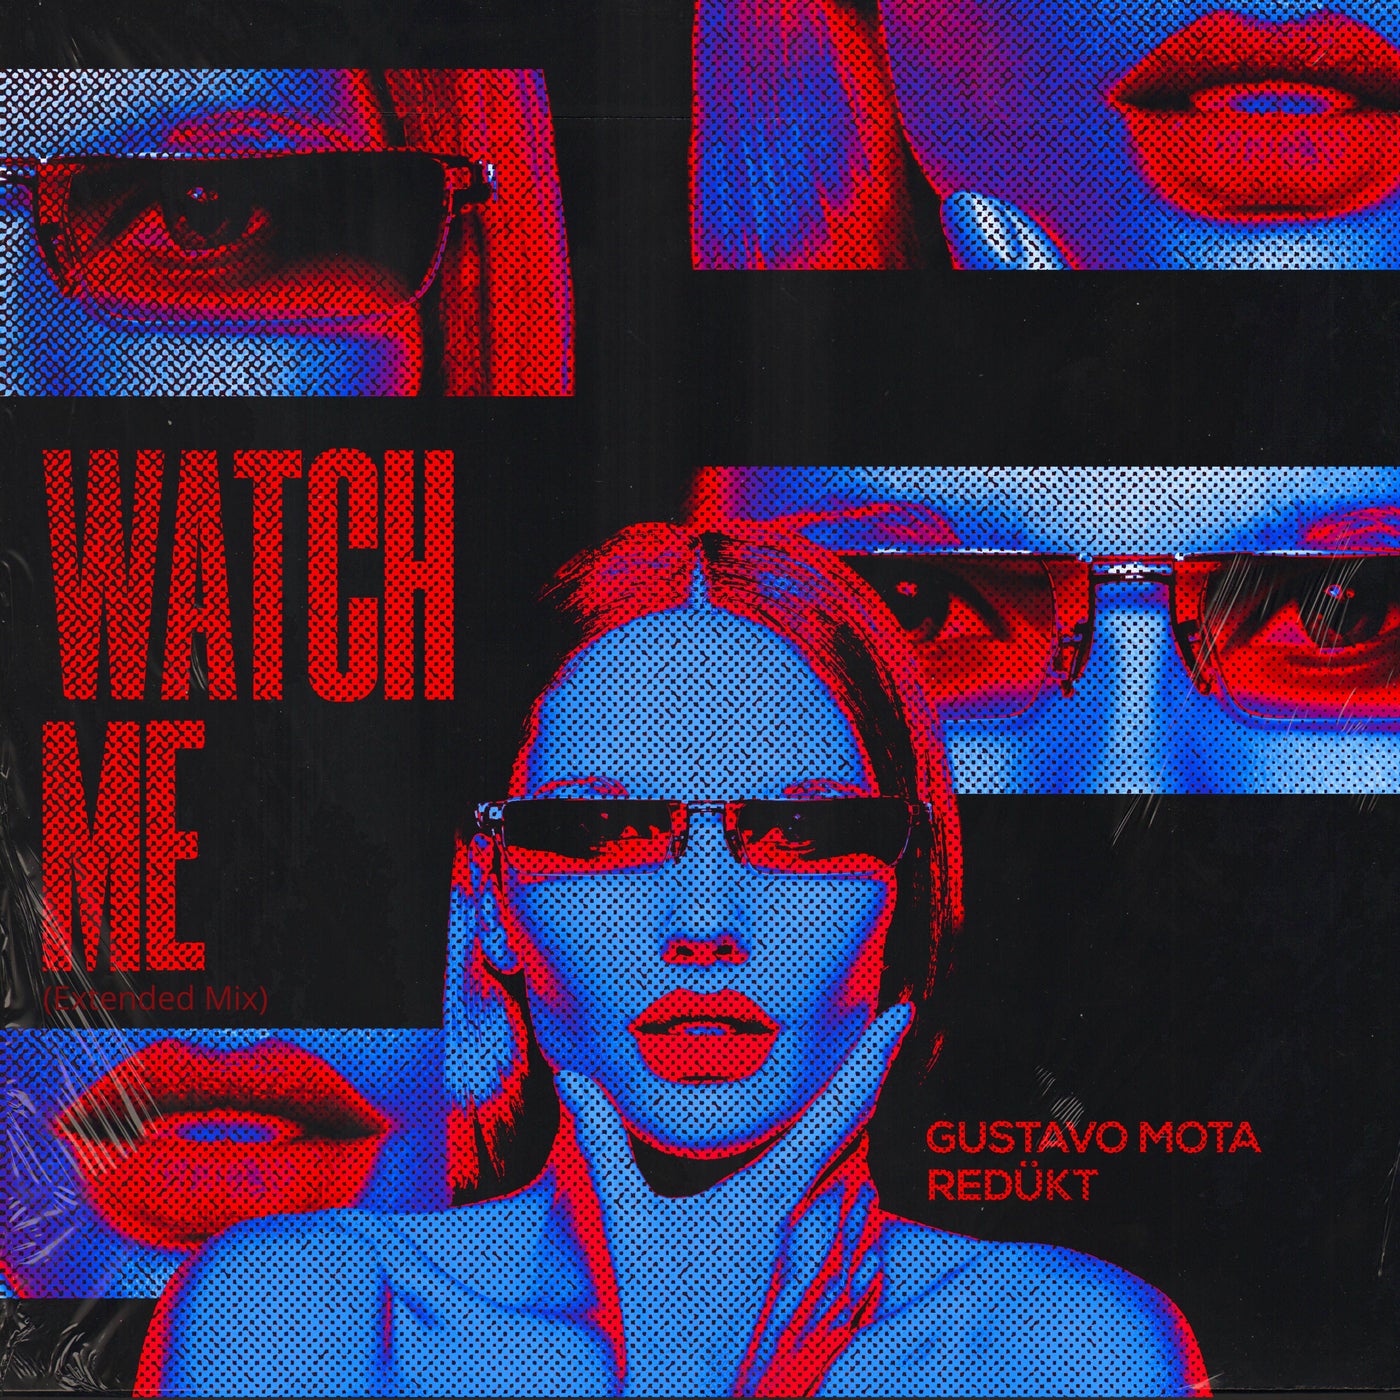 image cover: Gustavo Mota, REDÜKT - Watch Me (Extended Mix) on YOYOTRACKS